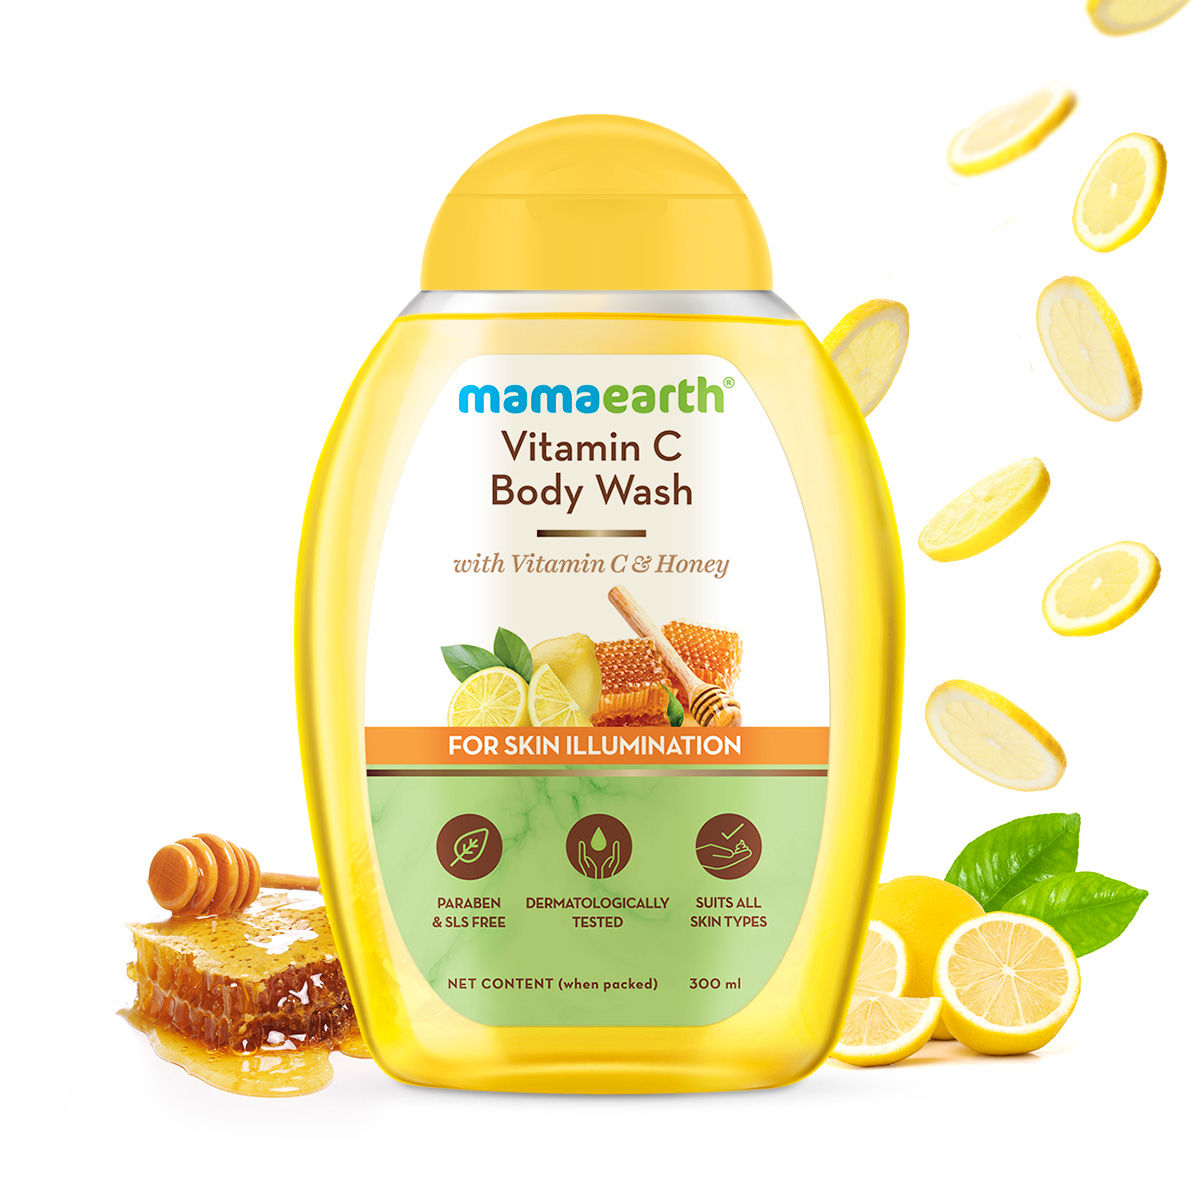 Mamaearth Vitamin C Body Wash With Vitamin C & Honey For Skin Illumination